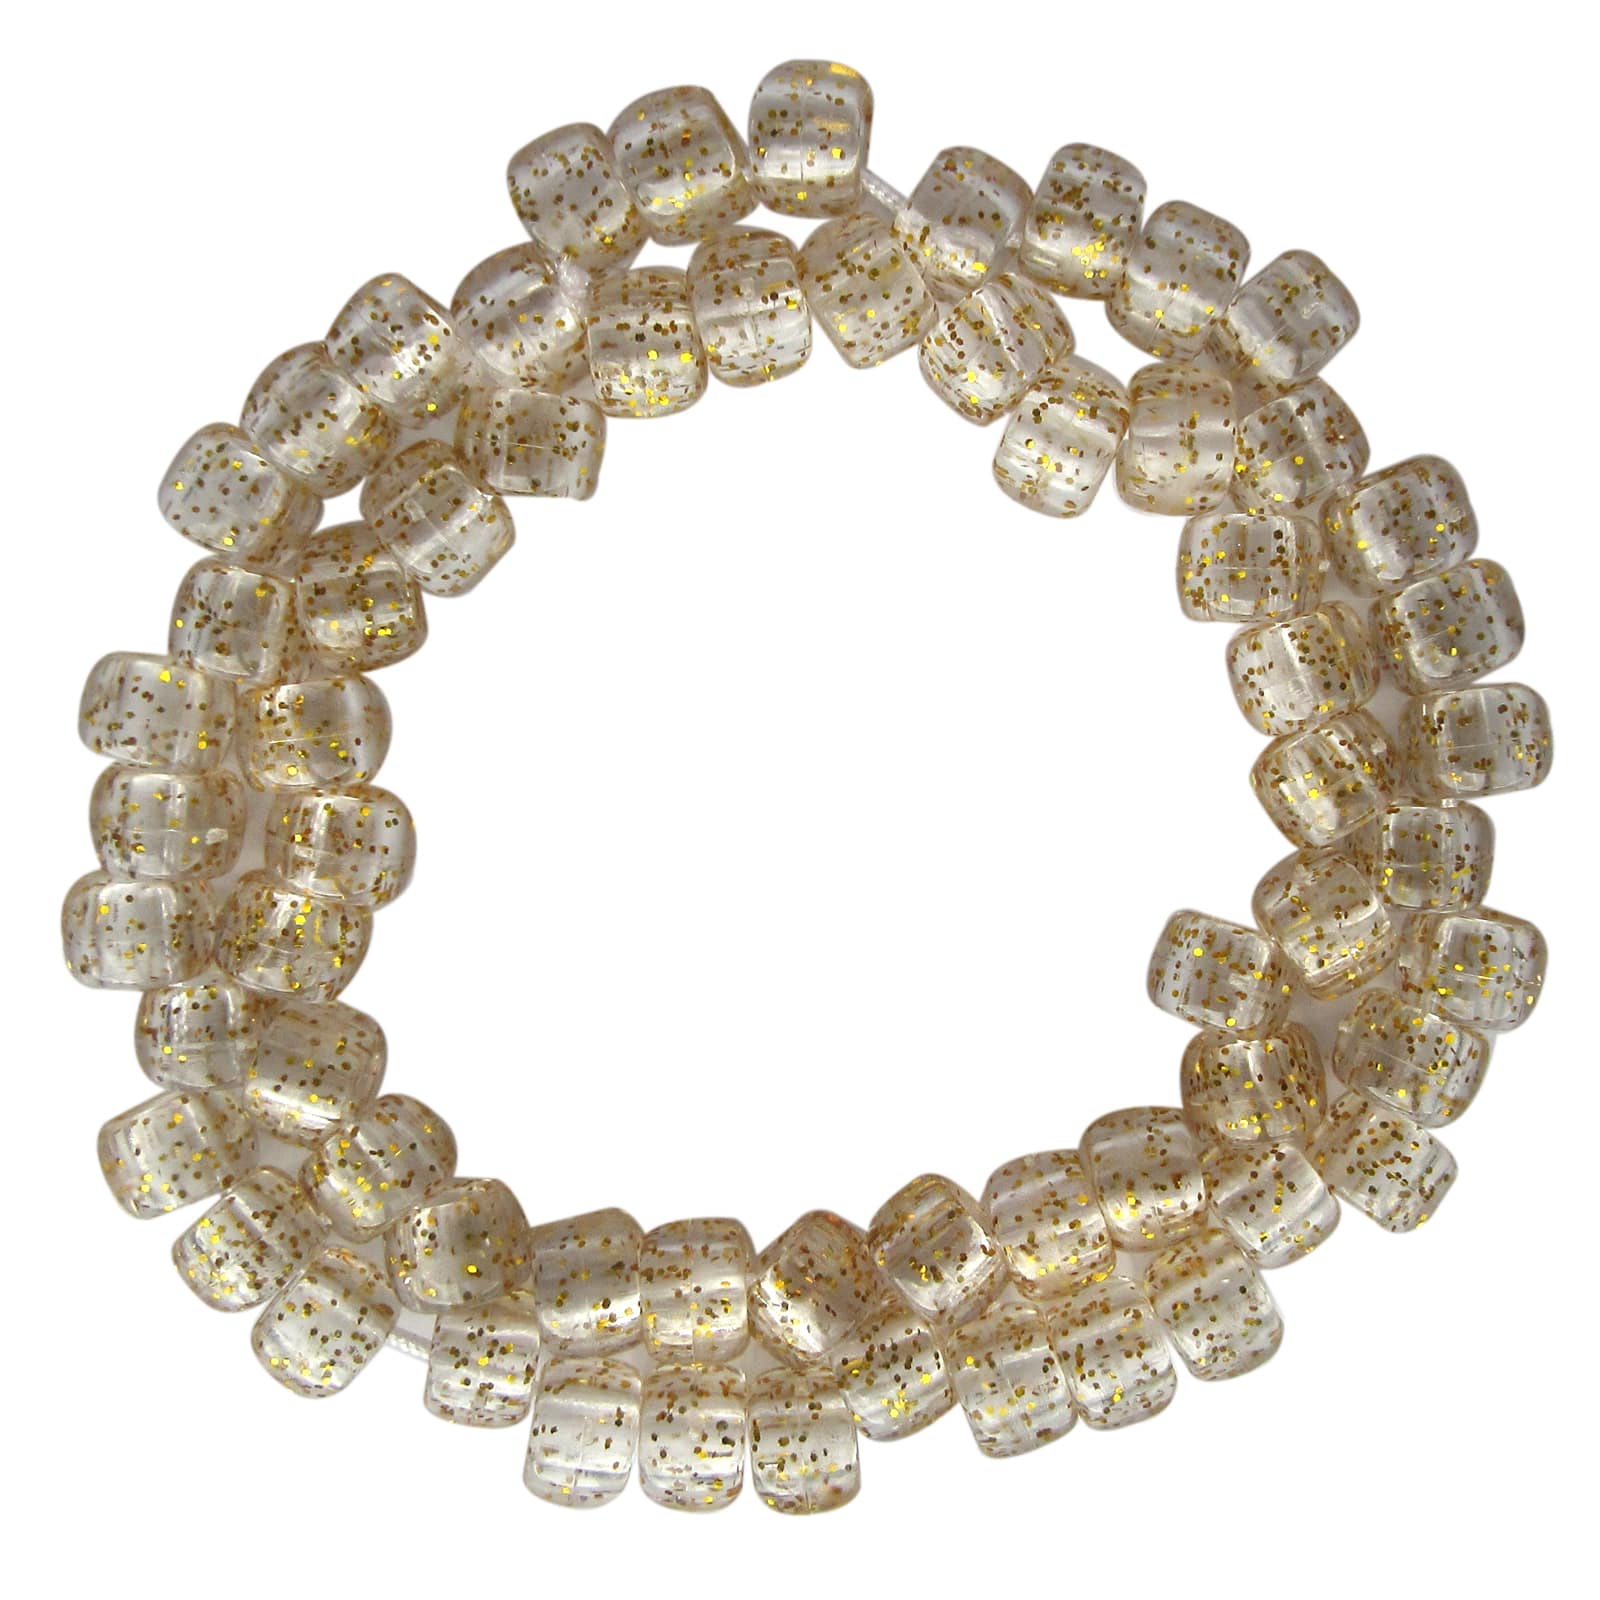 Pony Beads Transparent Glitter Gold 6mm X 9mm